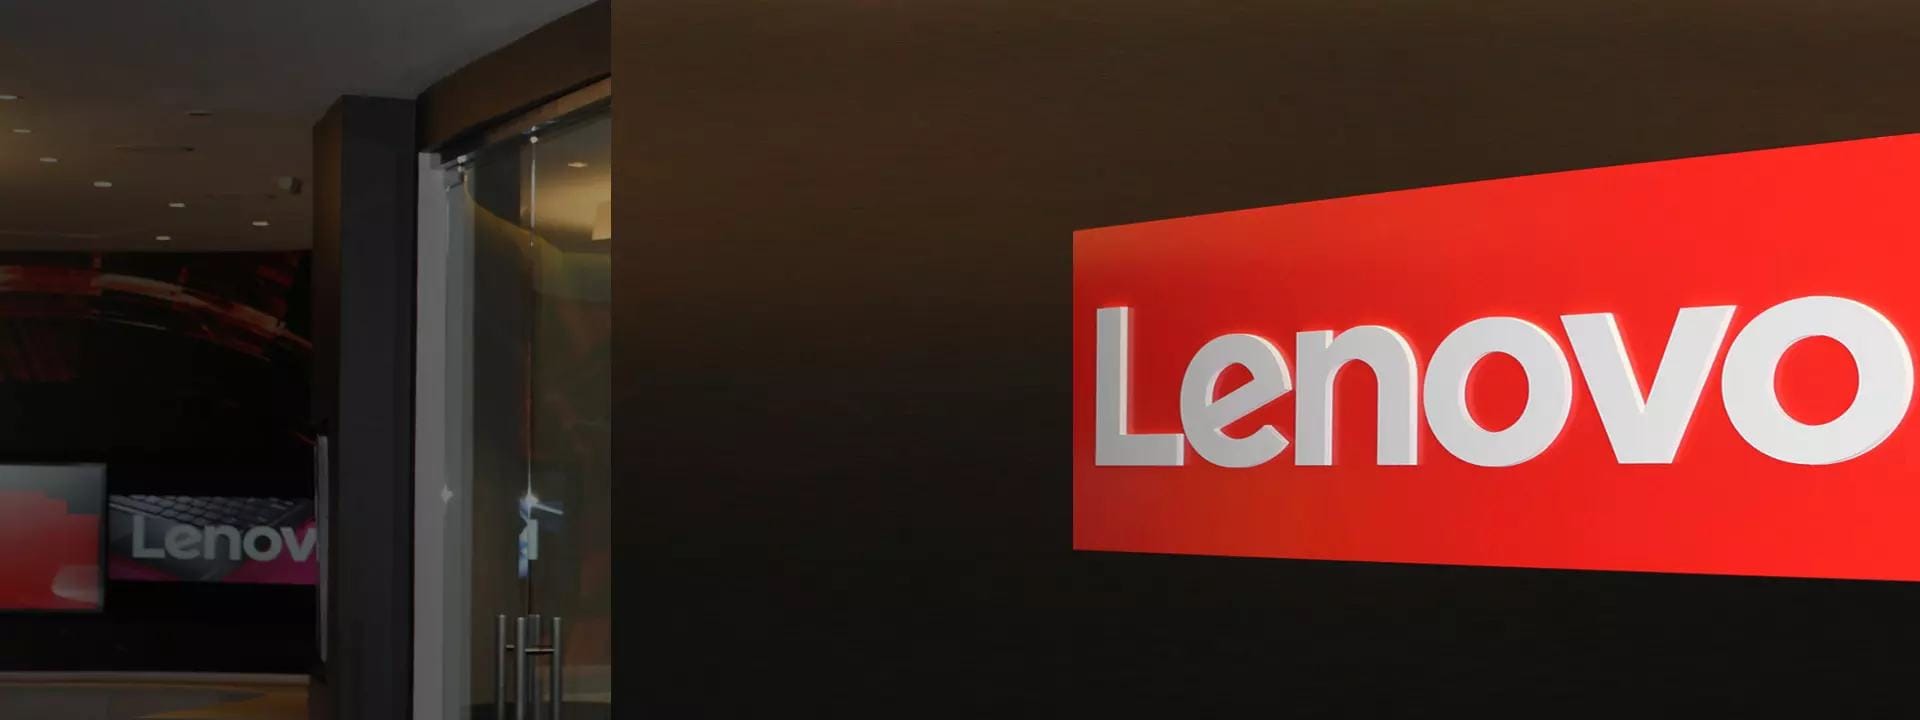 Lenovo Executive Briefing Center and Customer Engagement - Lenovo logo